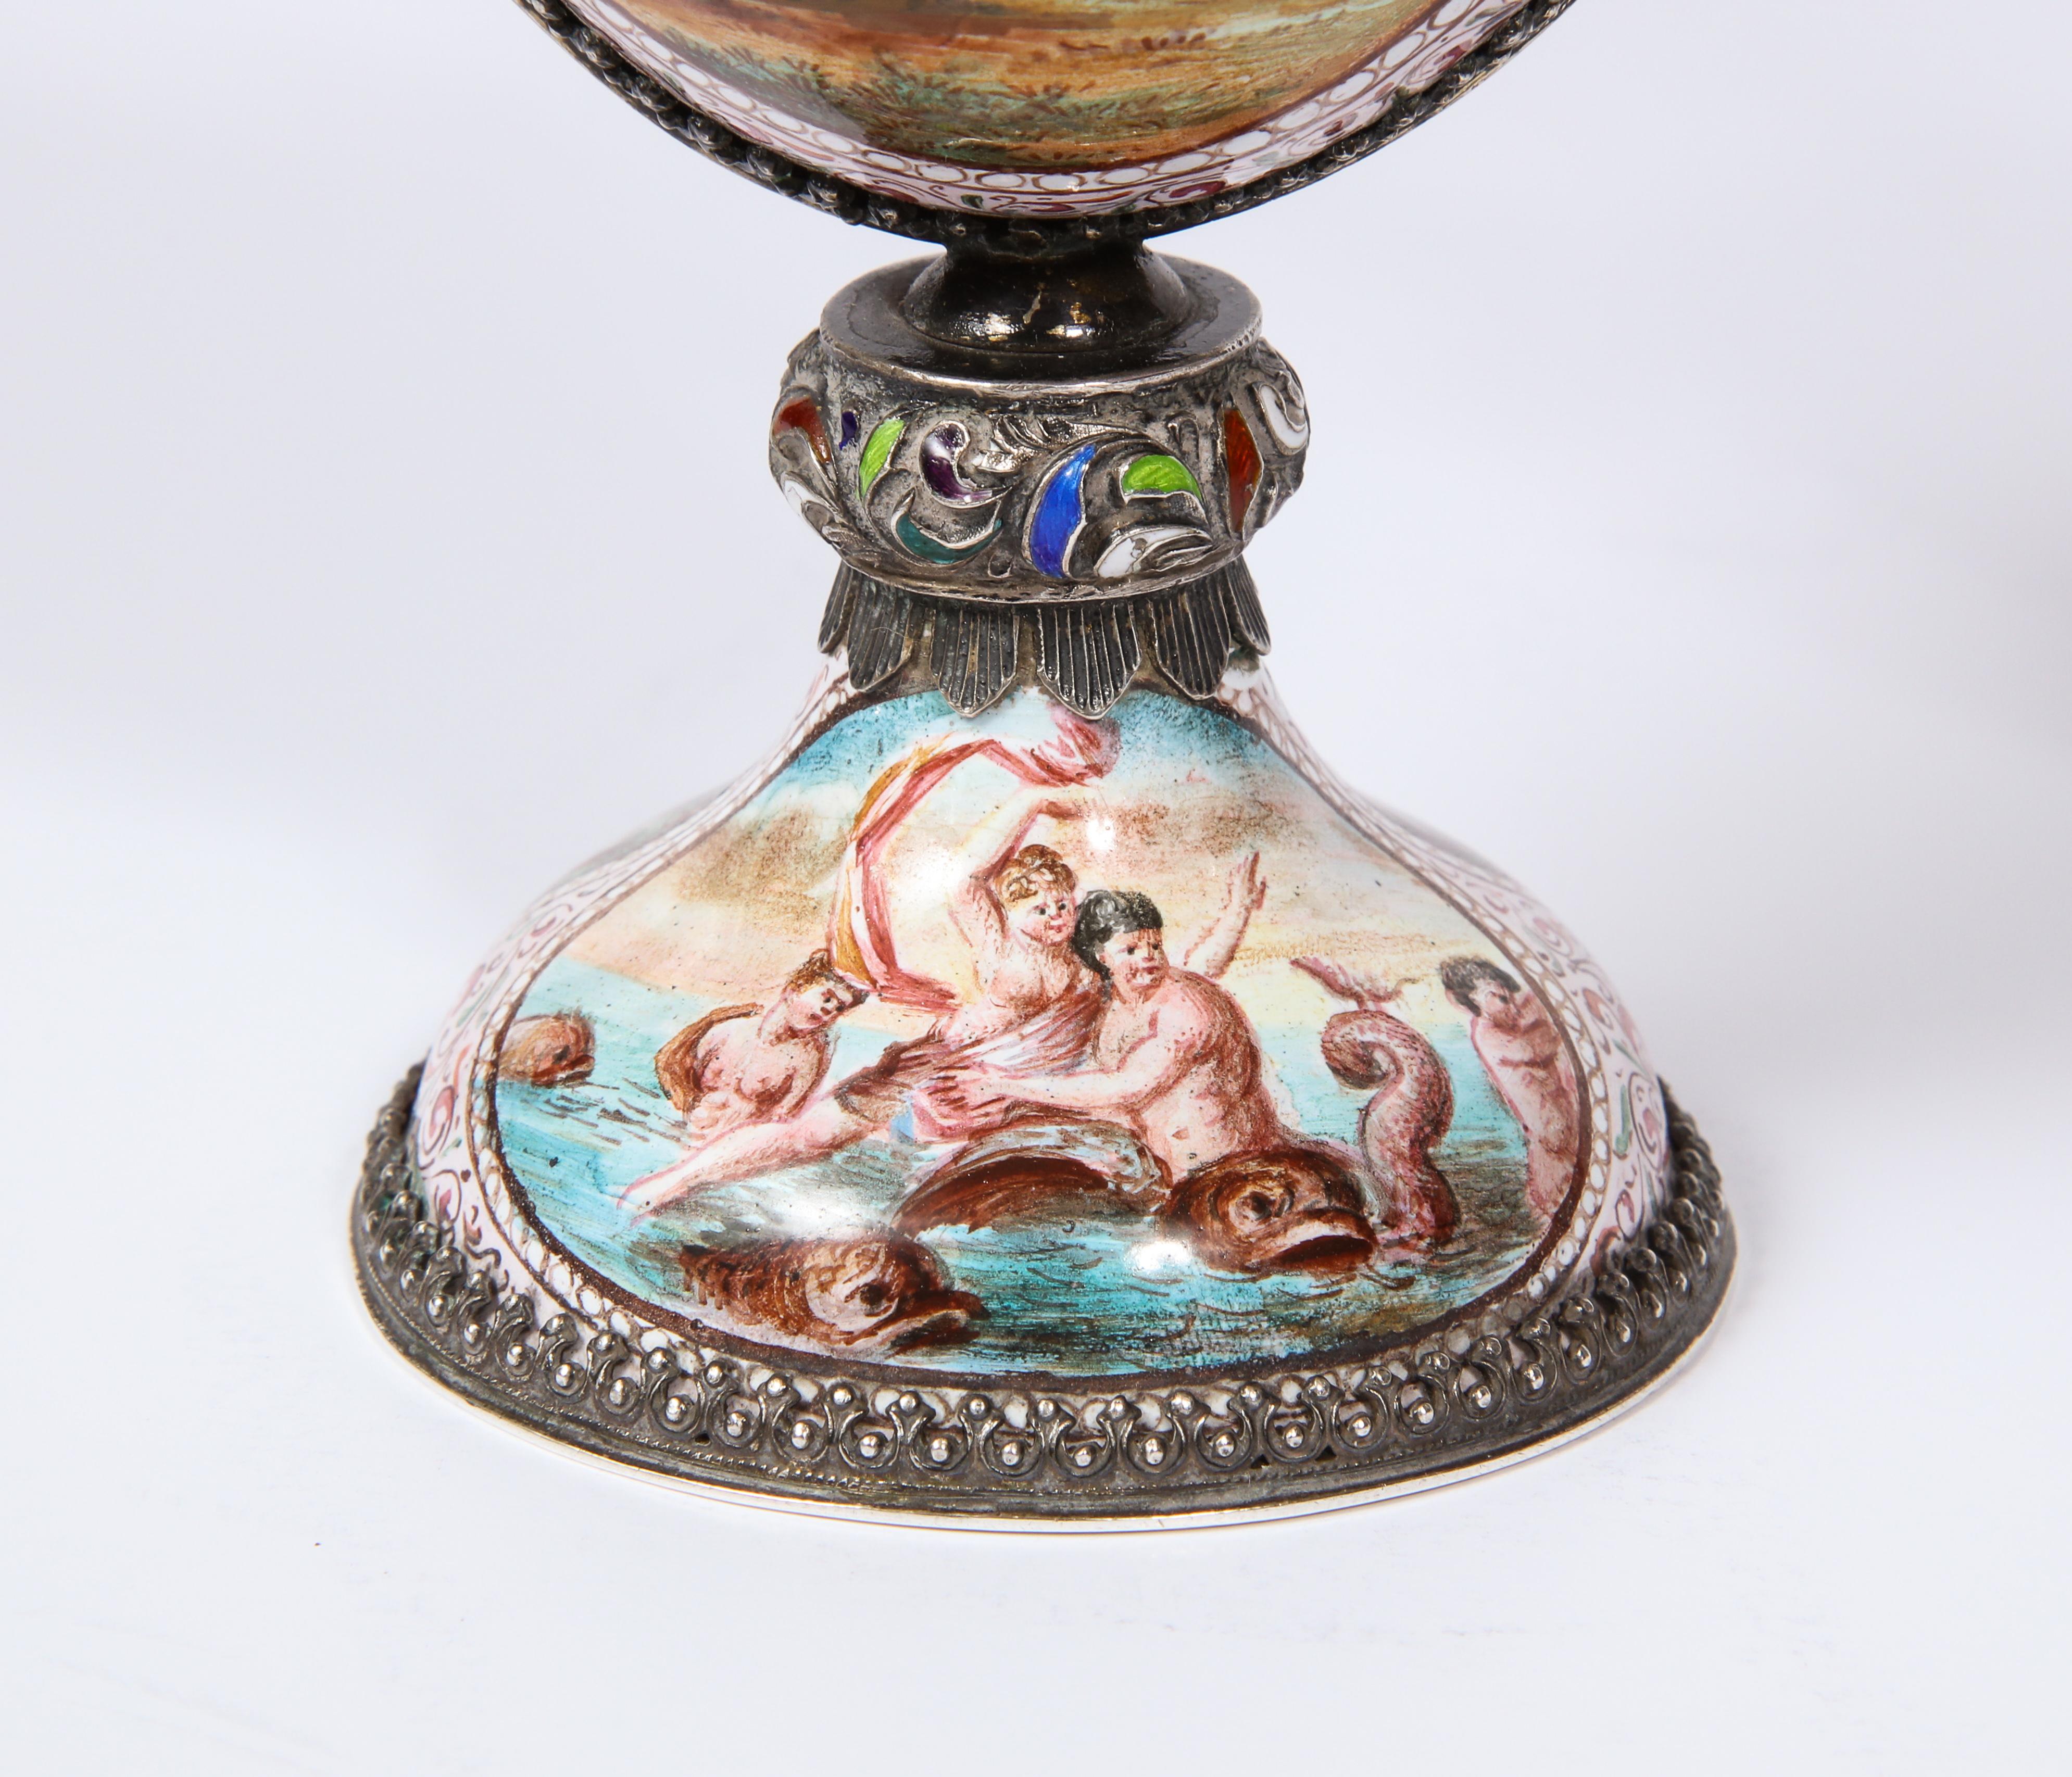 Pr. Viennese Enamel on Silver Vases with Mythological Scenes Signed Hallmarks HB 8